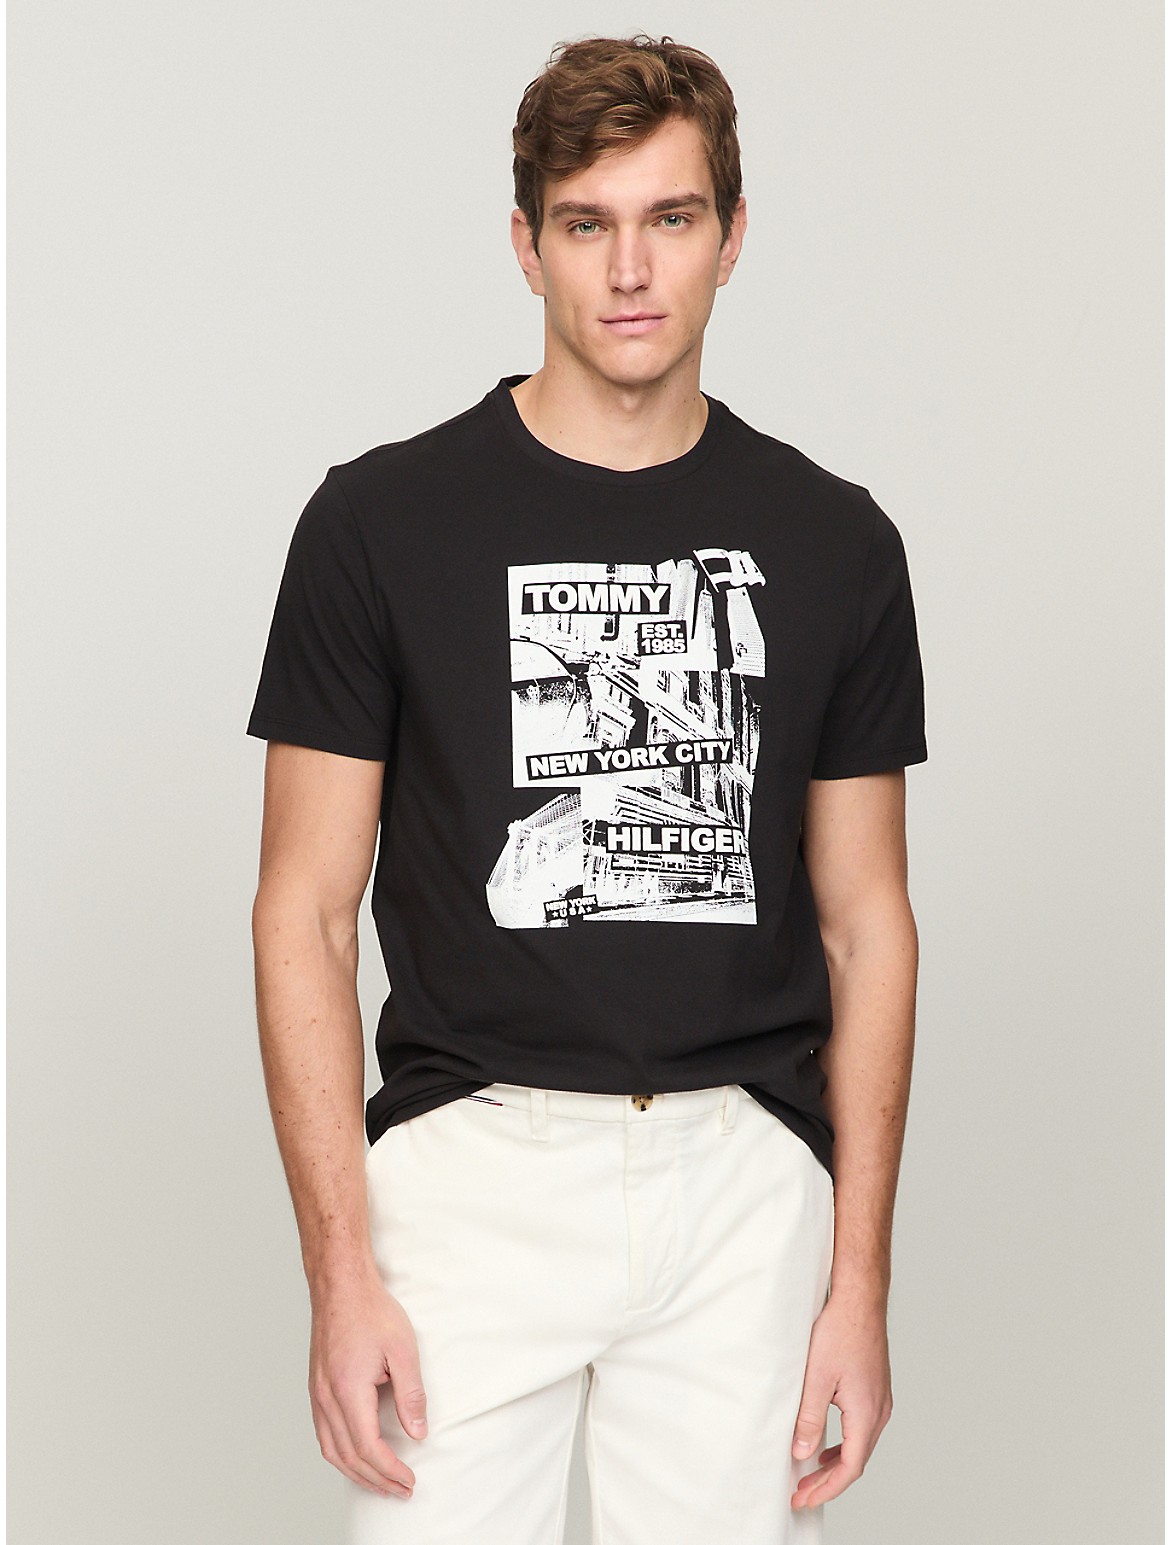 Tommy Hilfiger Men's New York Graphic T-Shirt